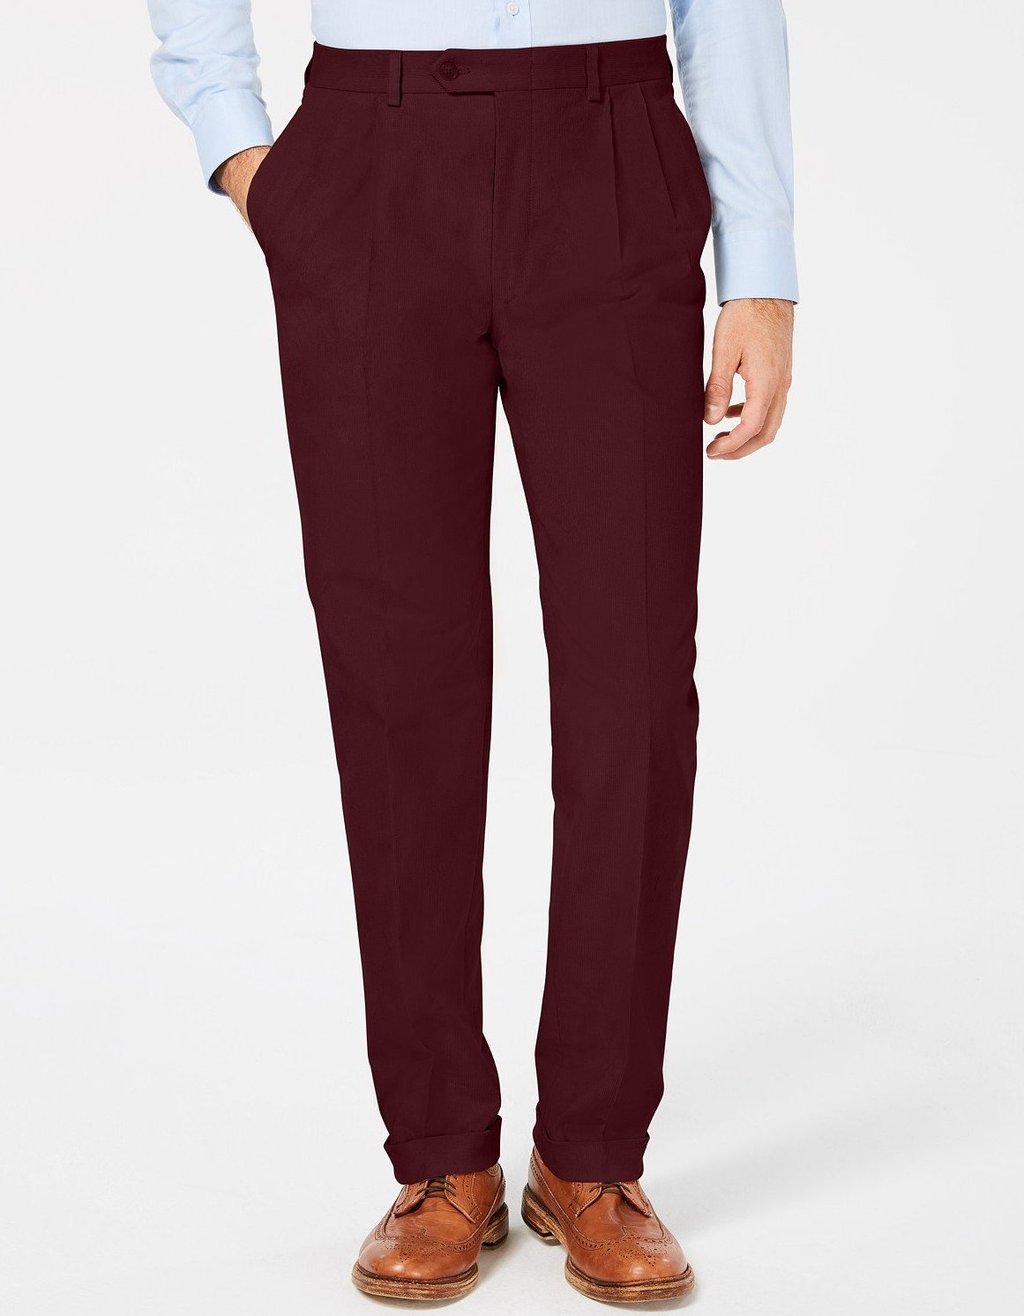 ASOS DESIGN slim tuxedo suit pants in burgundy | ASOS